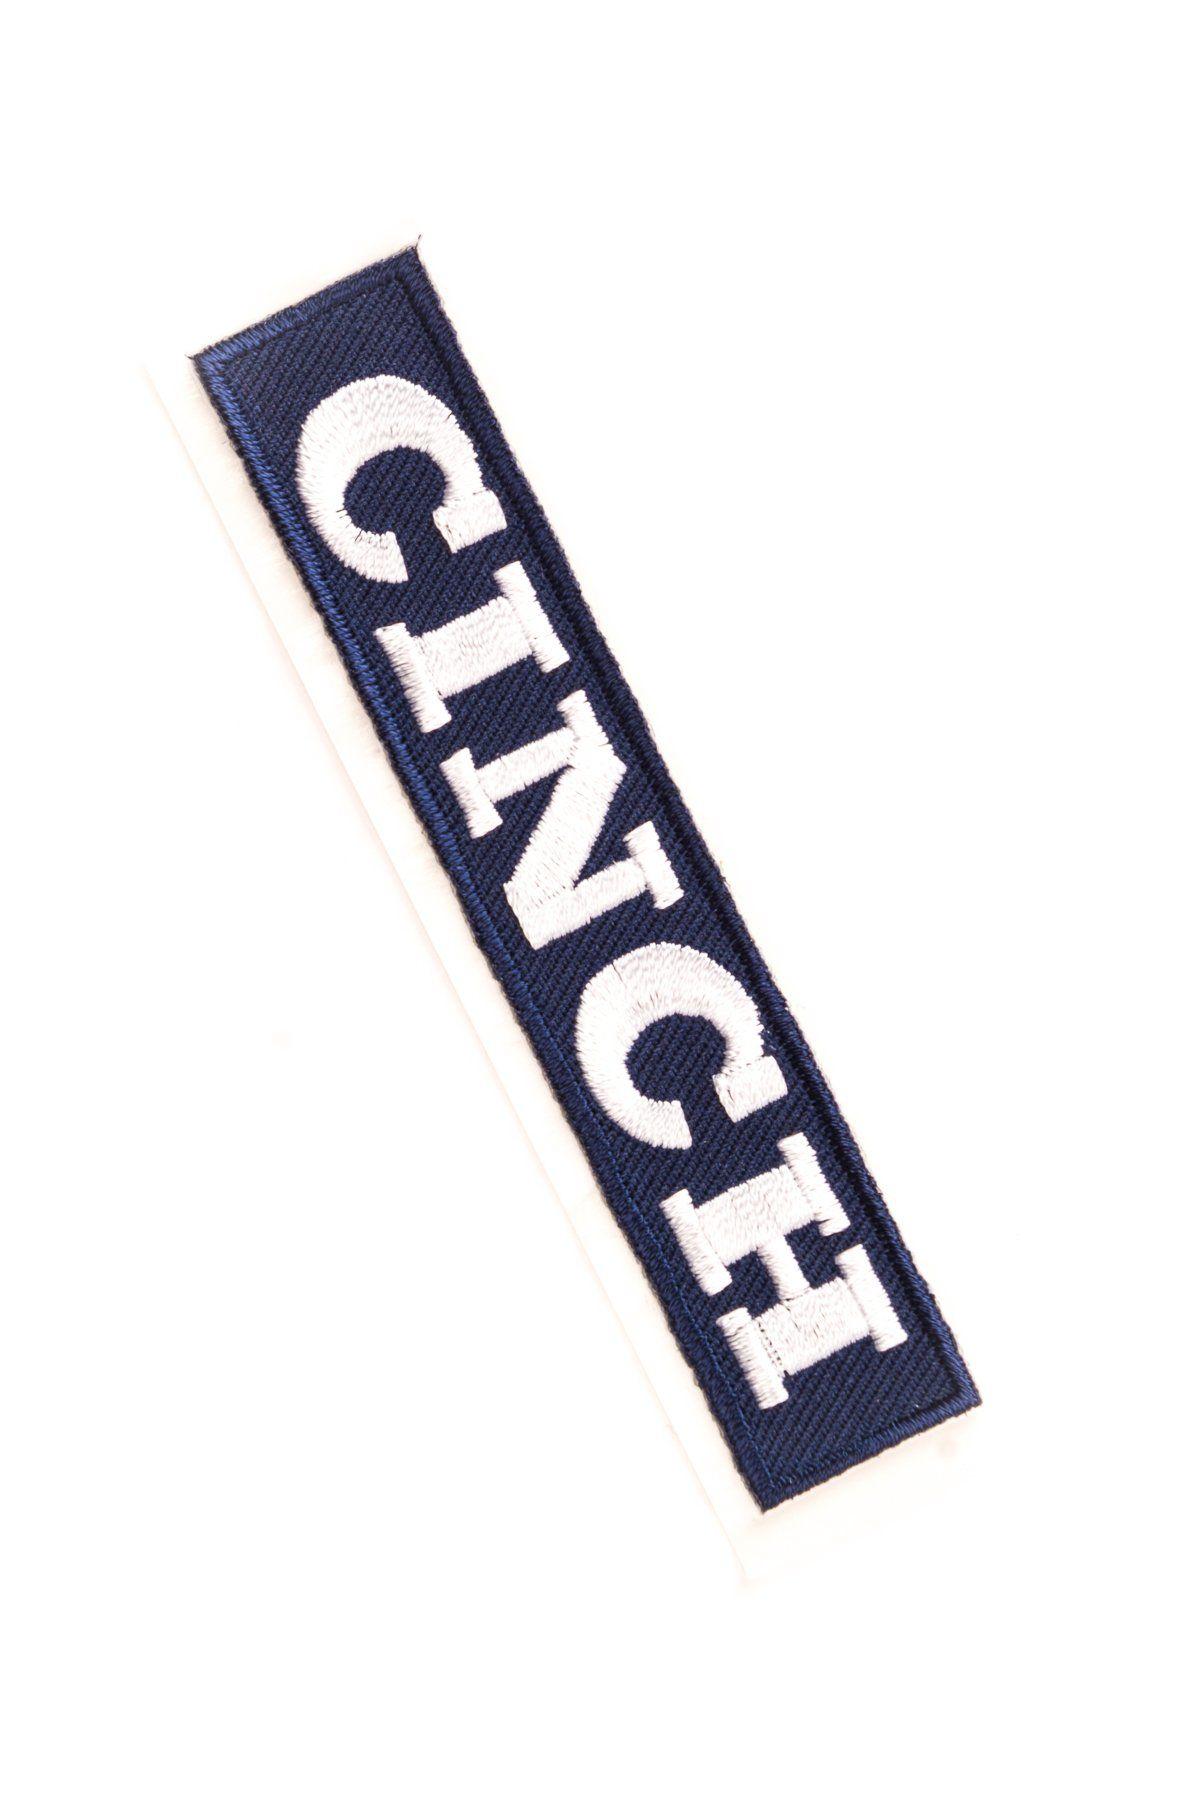 Cinch Logo - Cinch Jeans | CINCH Blue Logo Patch - 4